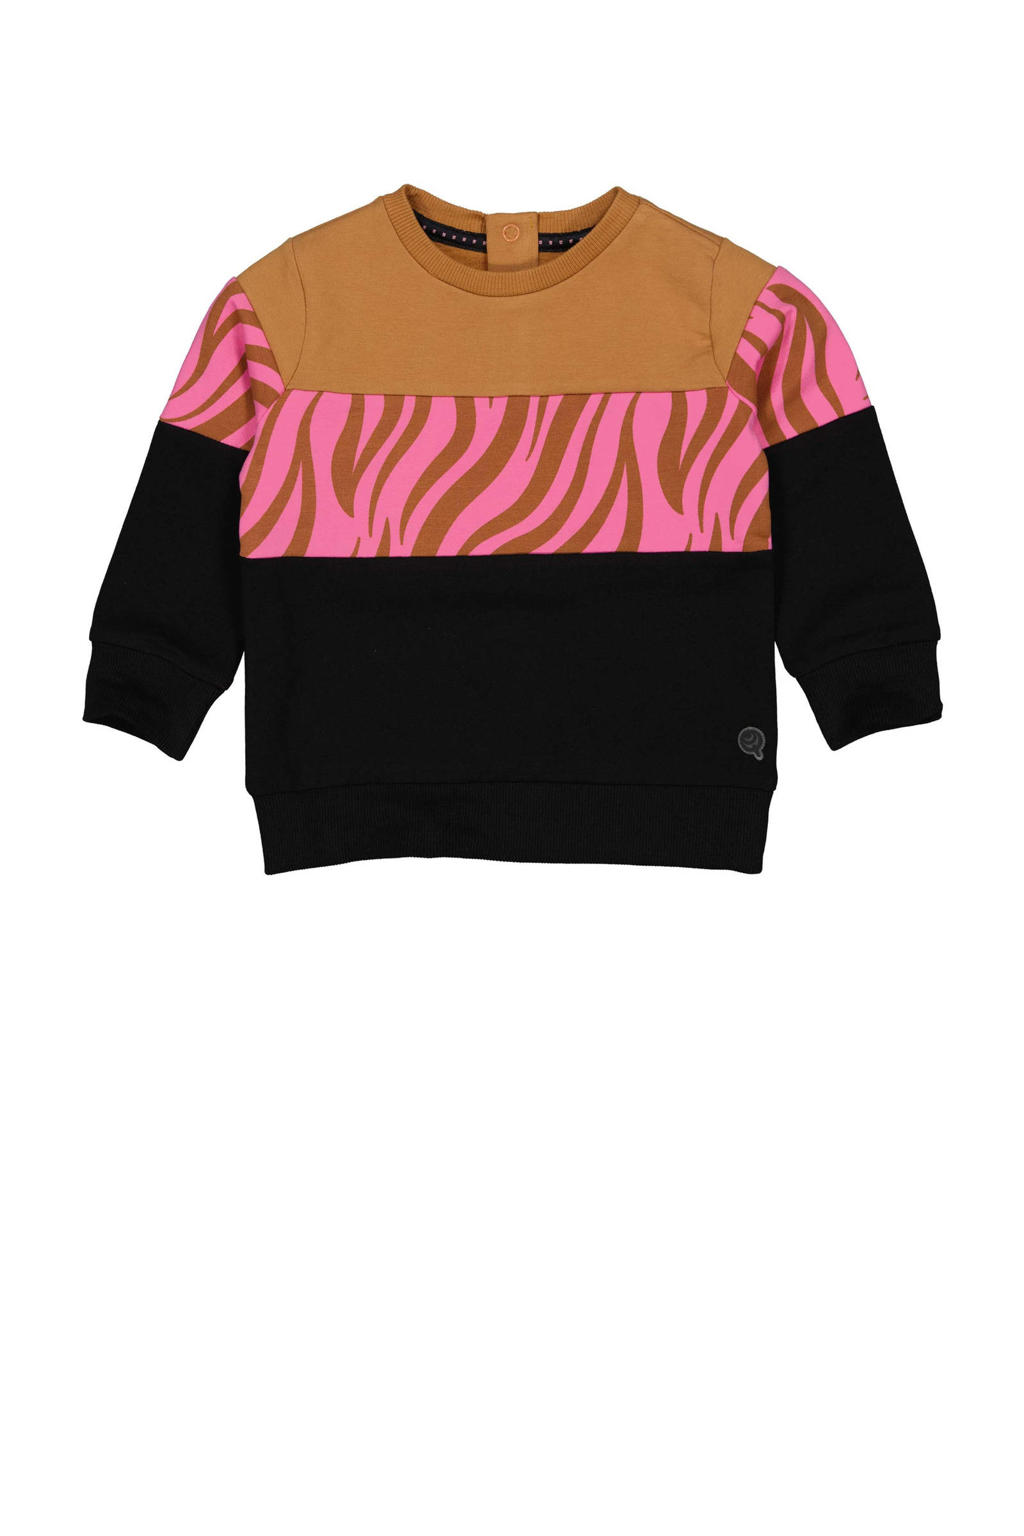 Quapi Mini sweater Serena bruin/roze/zwart